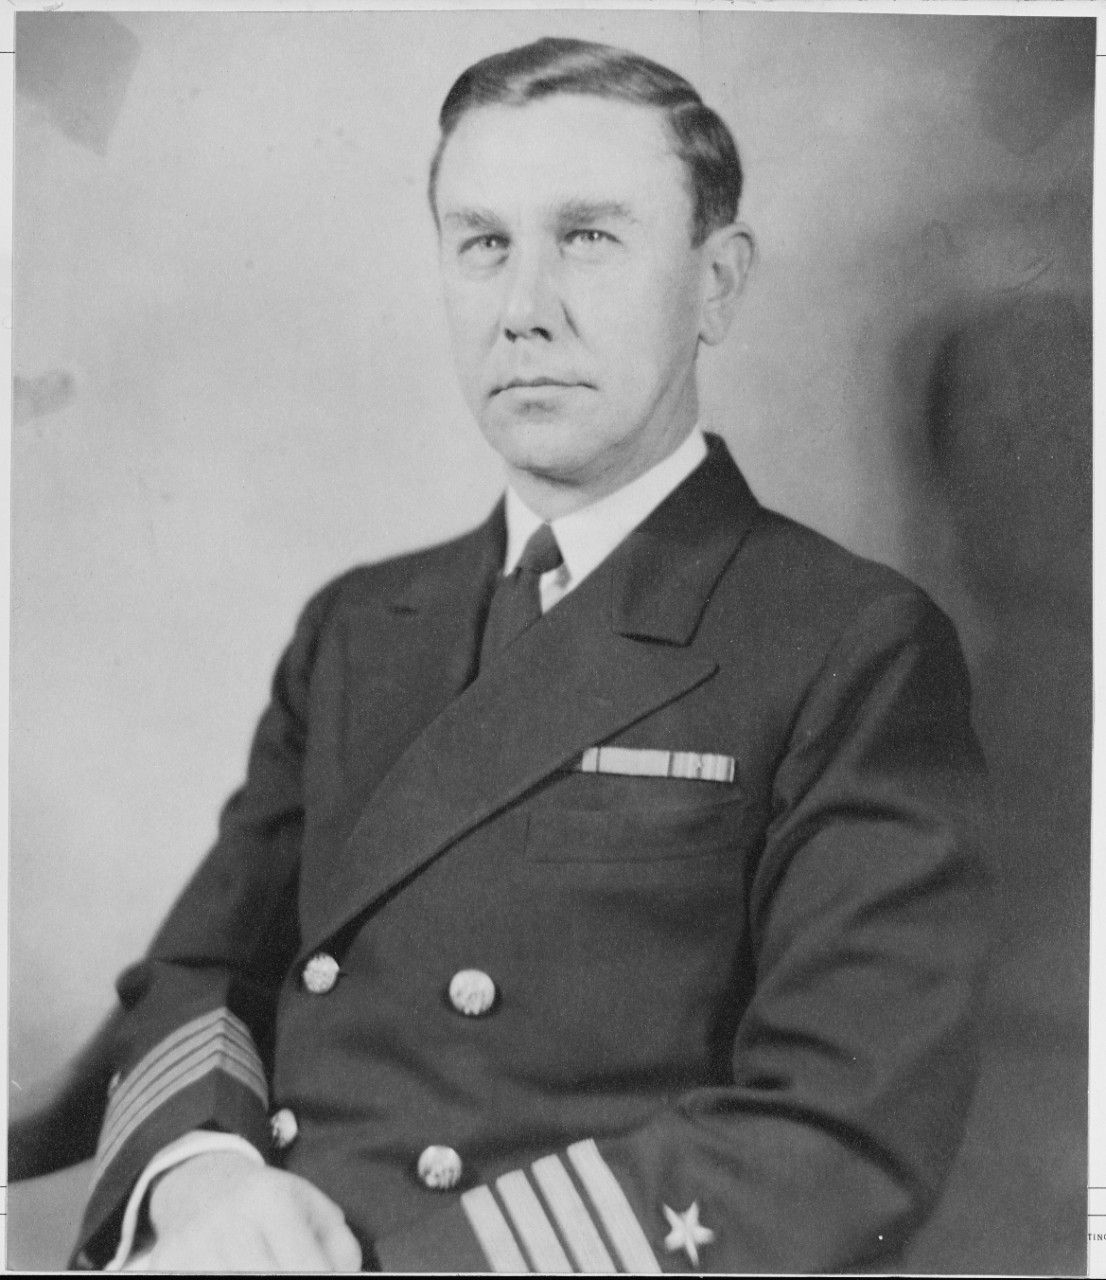 Captain Cortlandt C. Baughman, USN